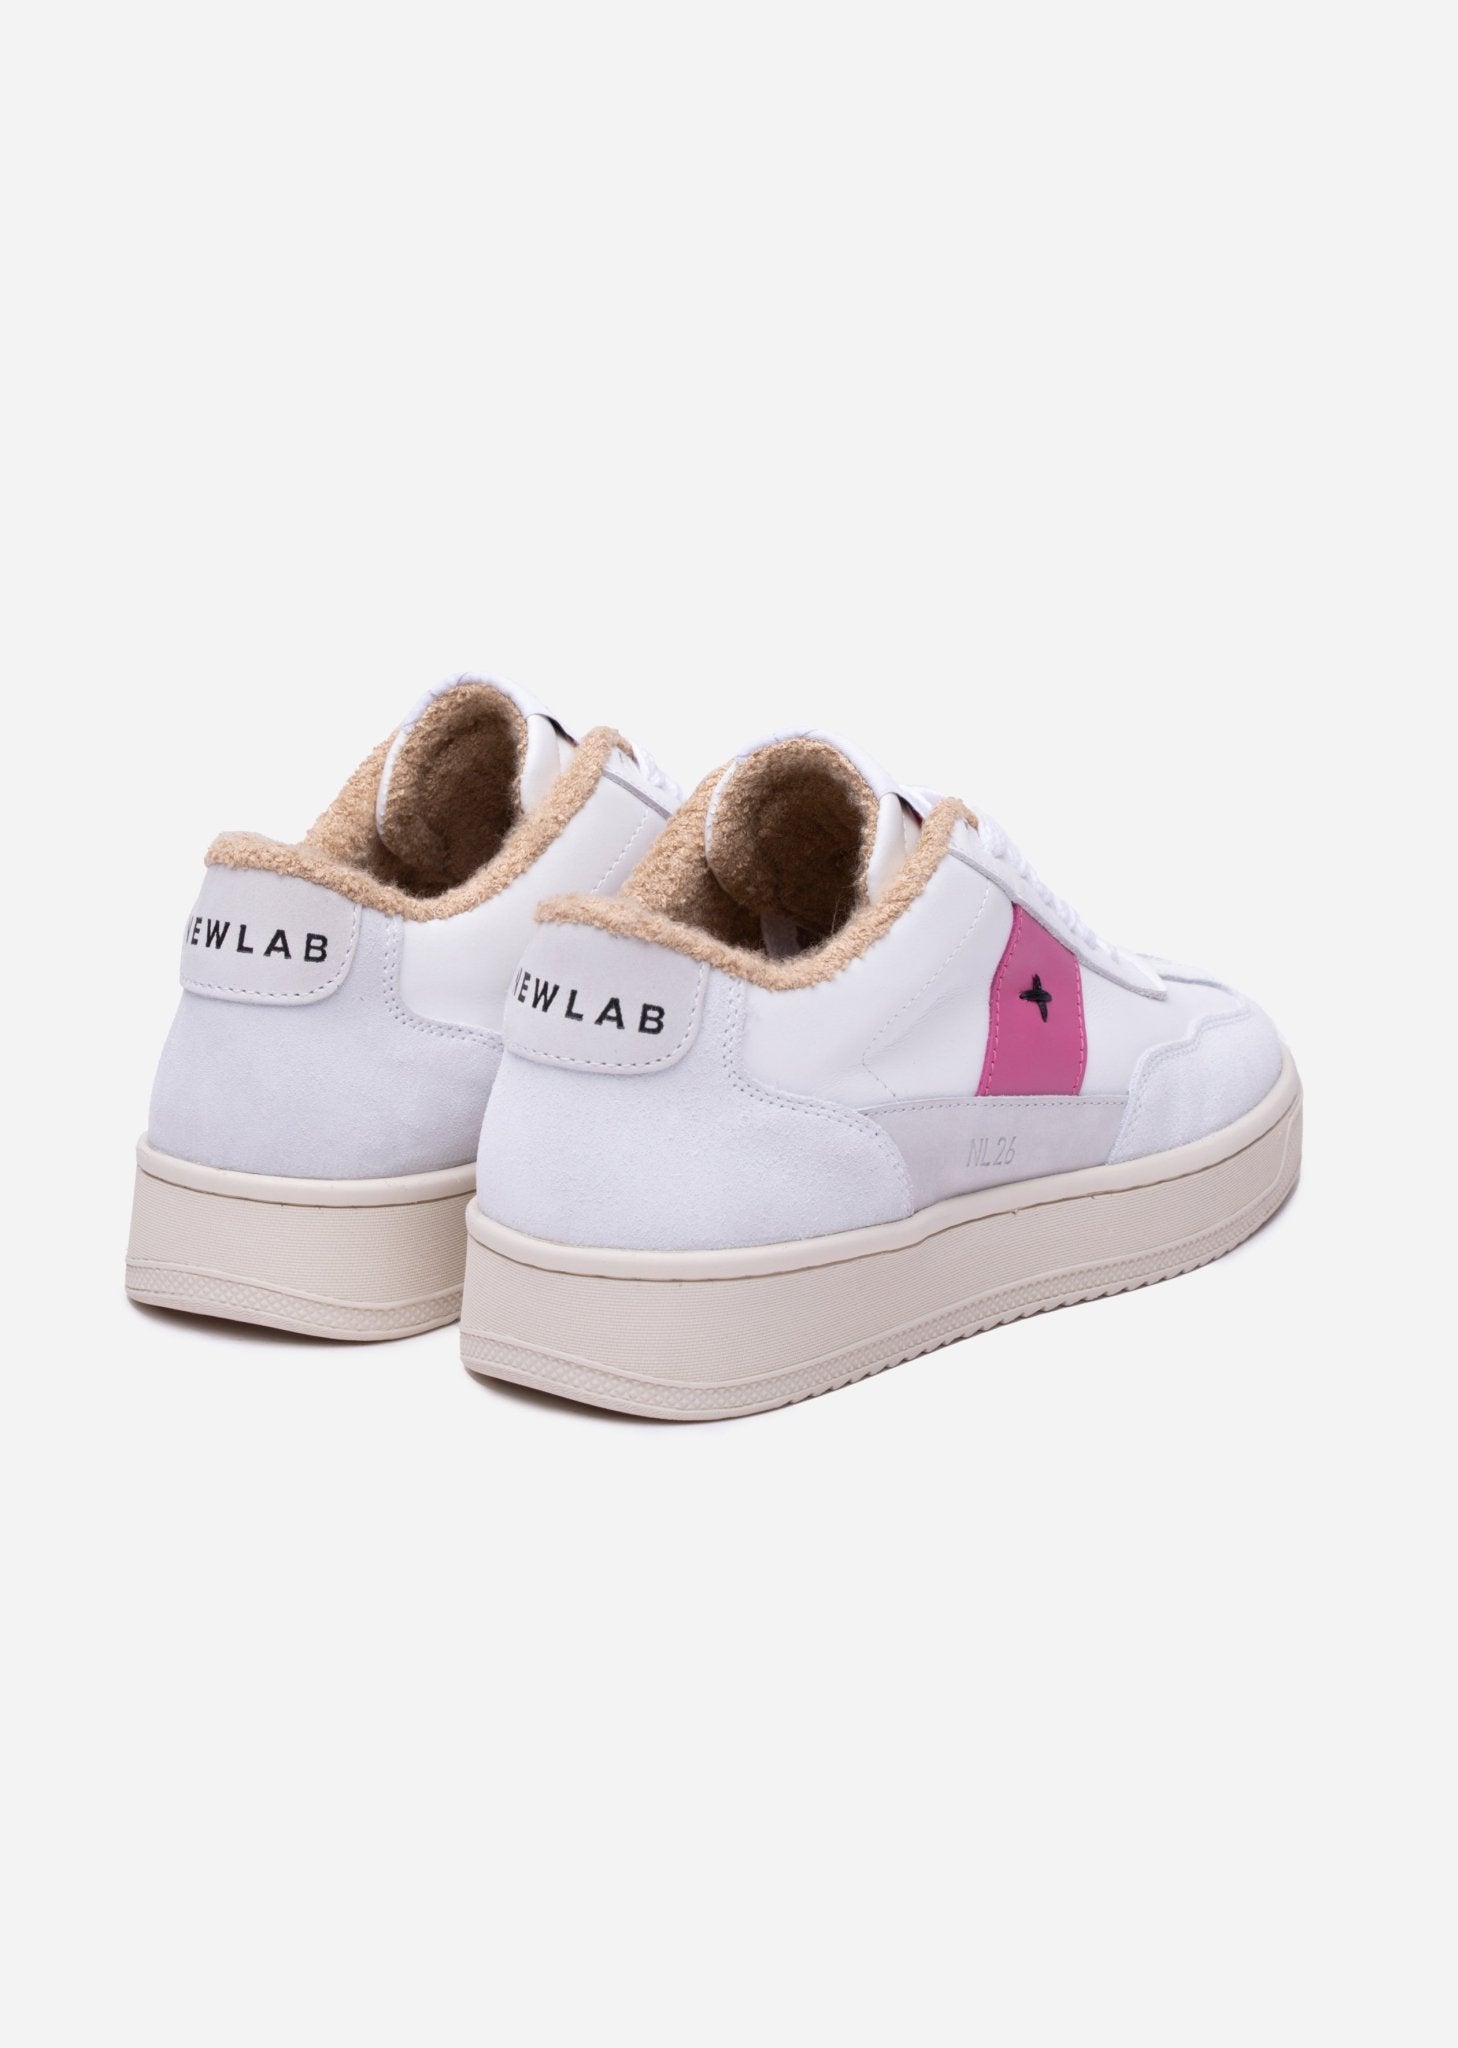 NL26 White/Pink - NEWLAB - Chaussures - NEWLAB